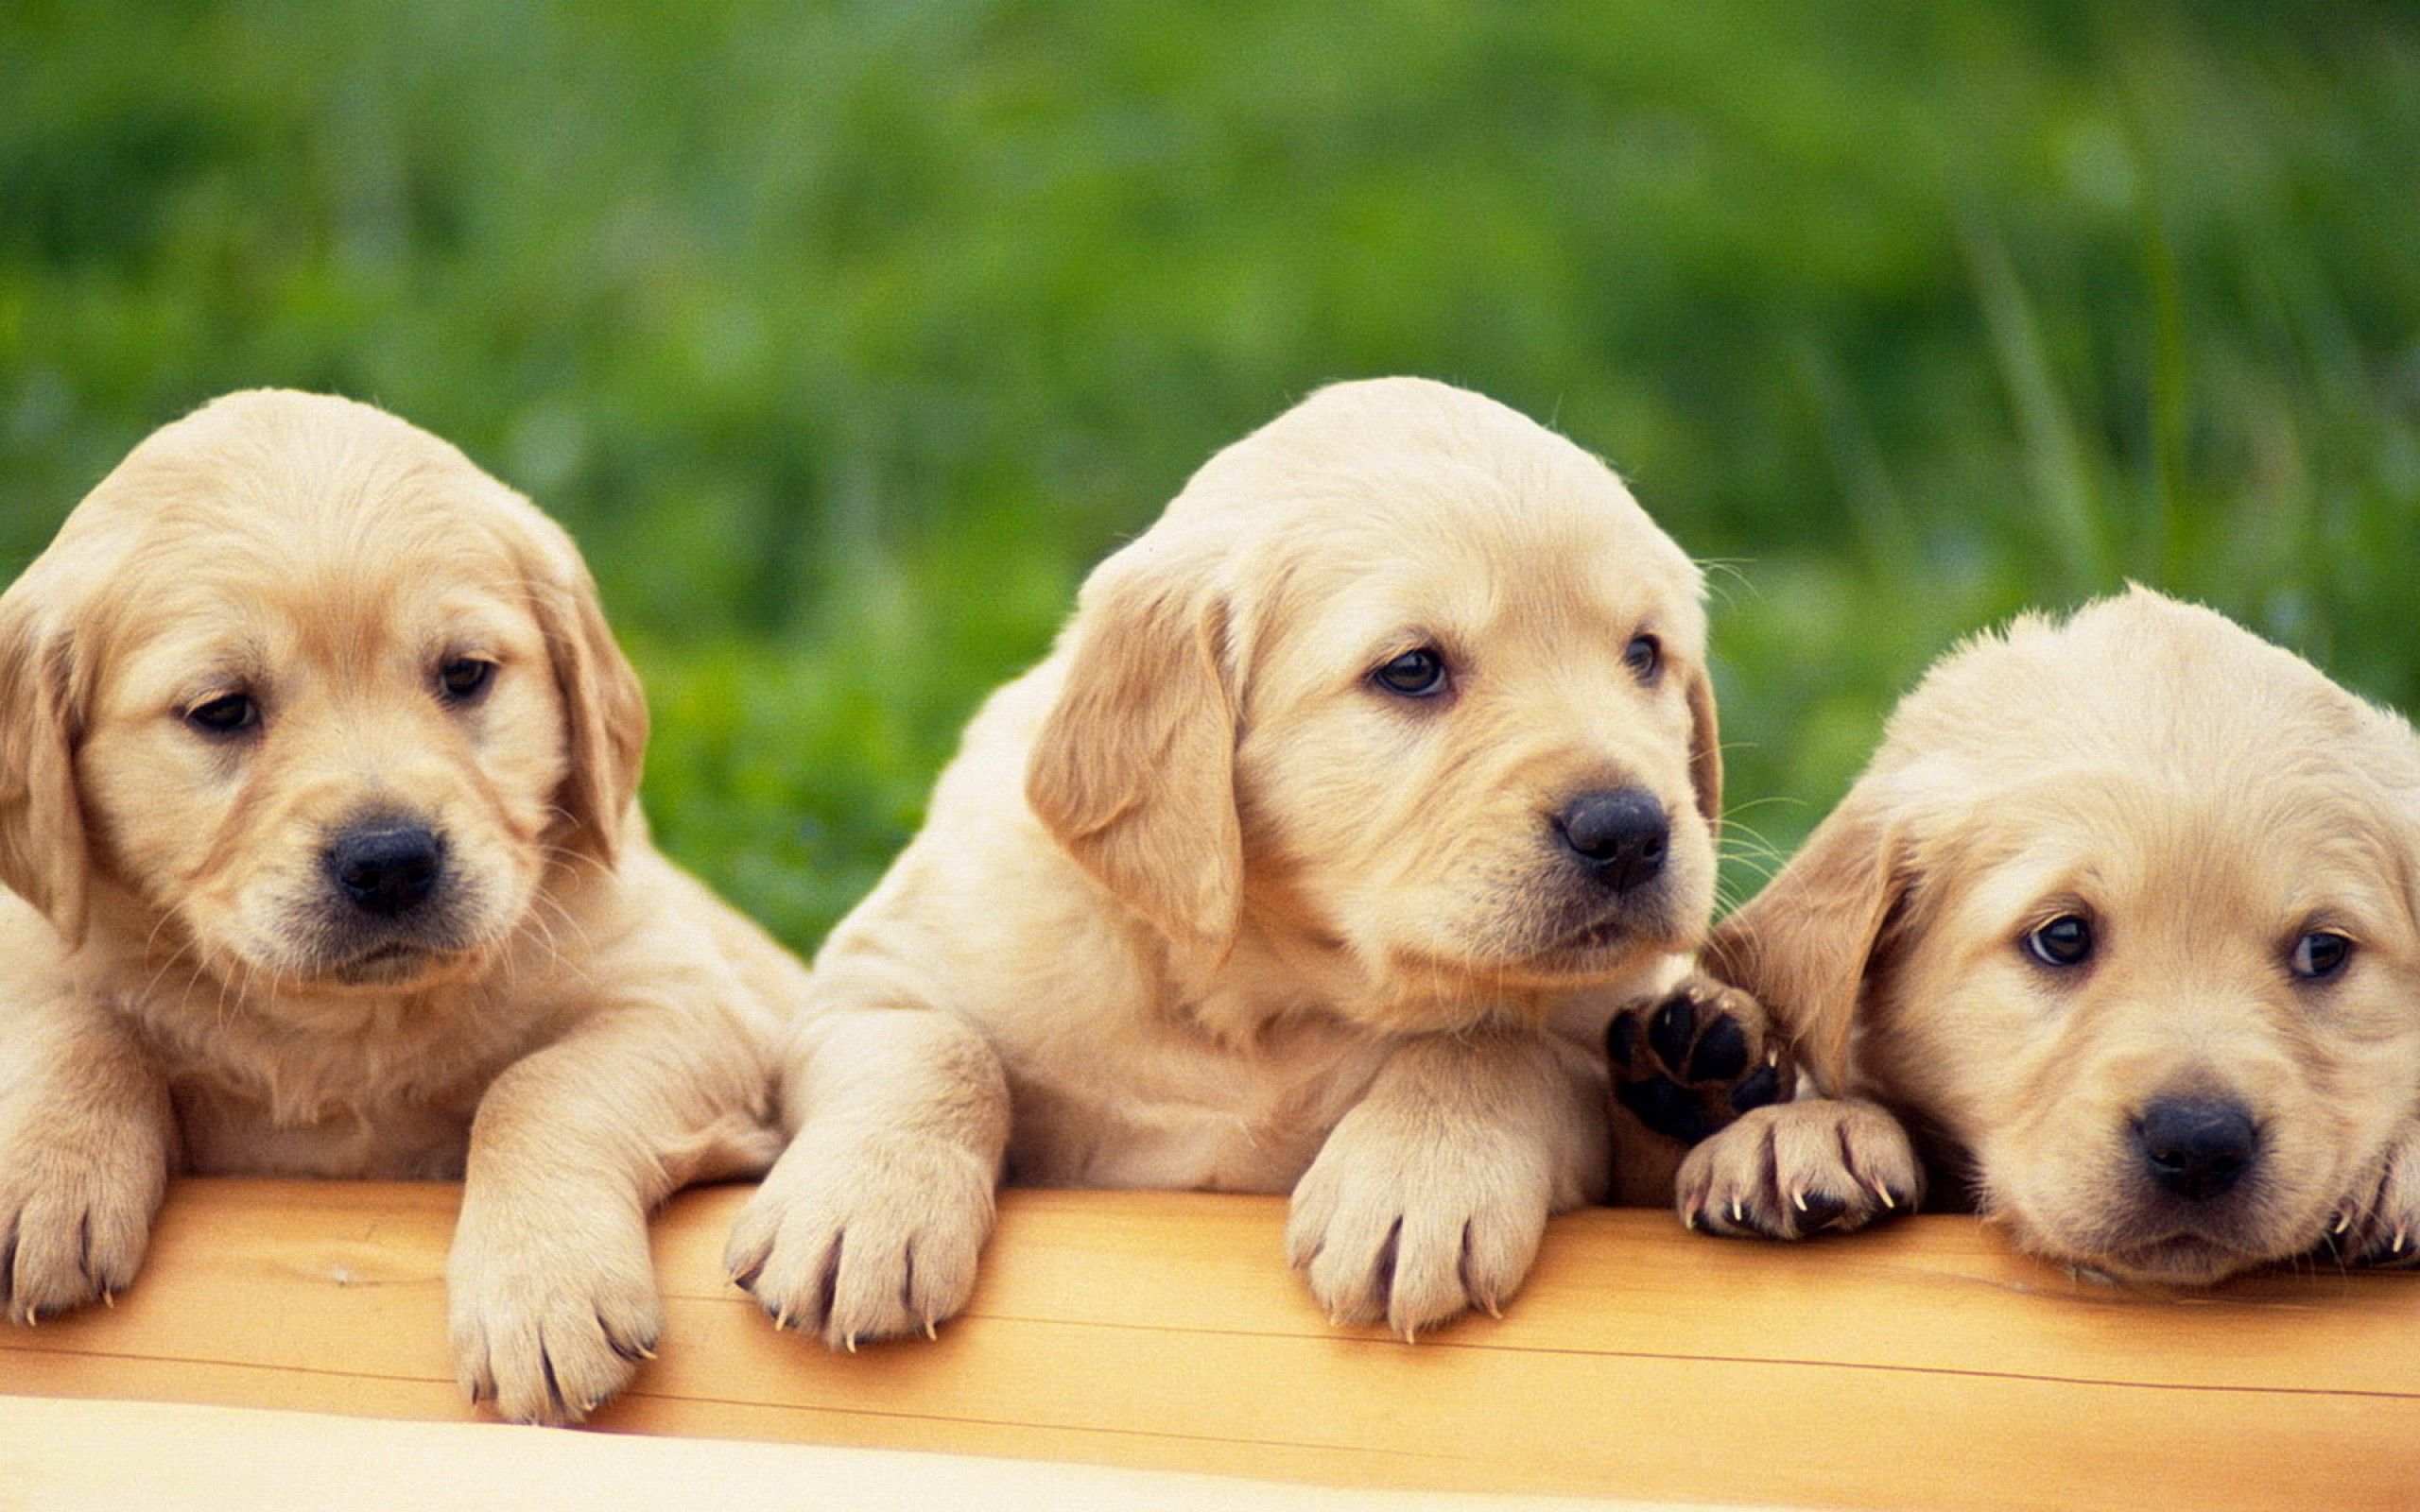 Funny Pet Wallpapers Cute Labrador Retriever Puppies 2560x1600PX